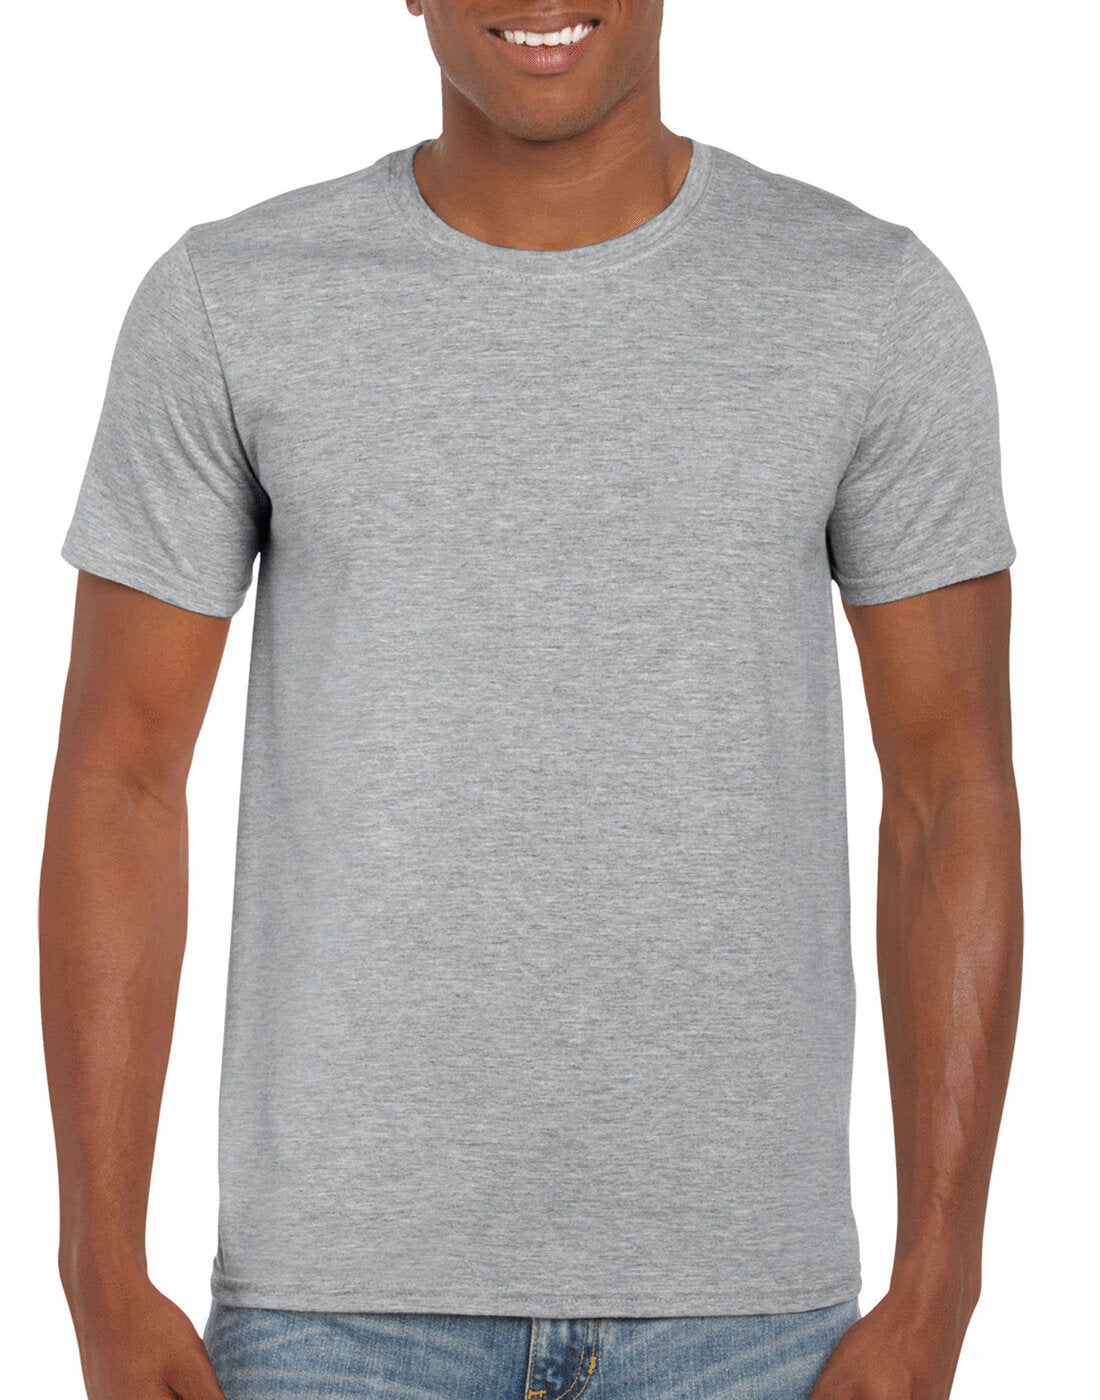 Gildan Adult Softstyle T-Shirt